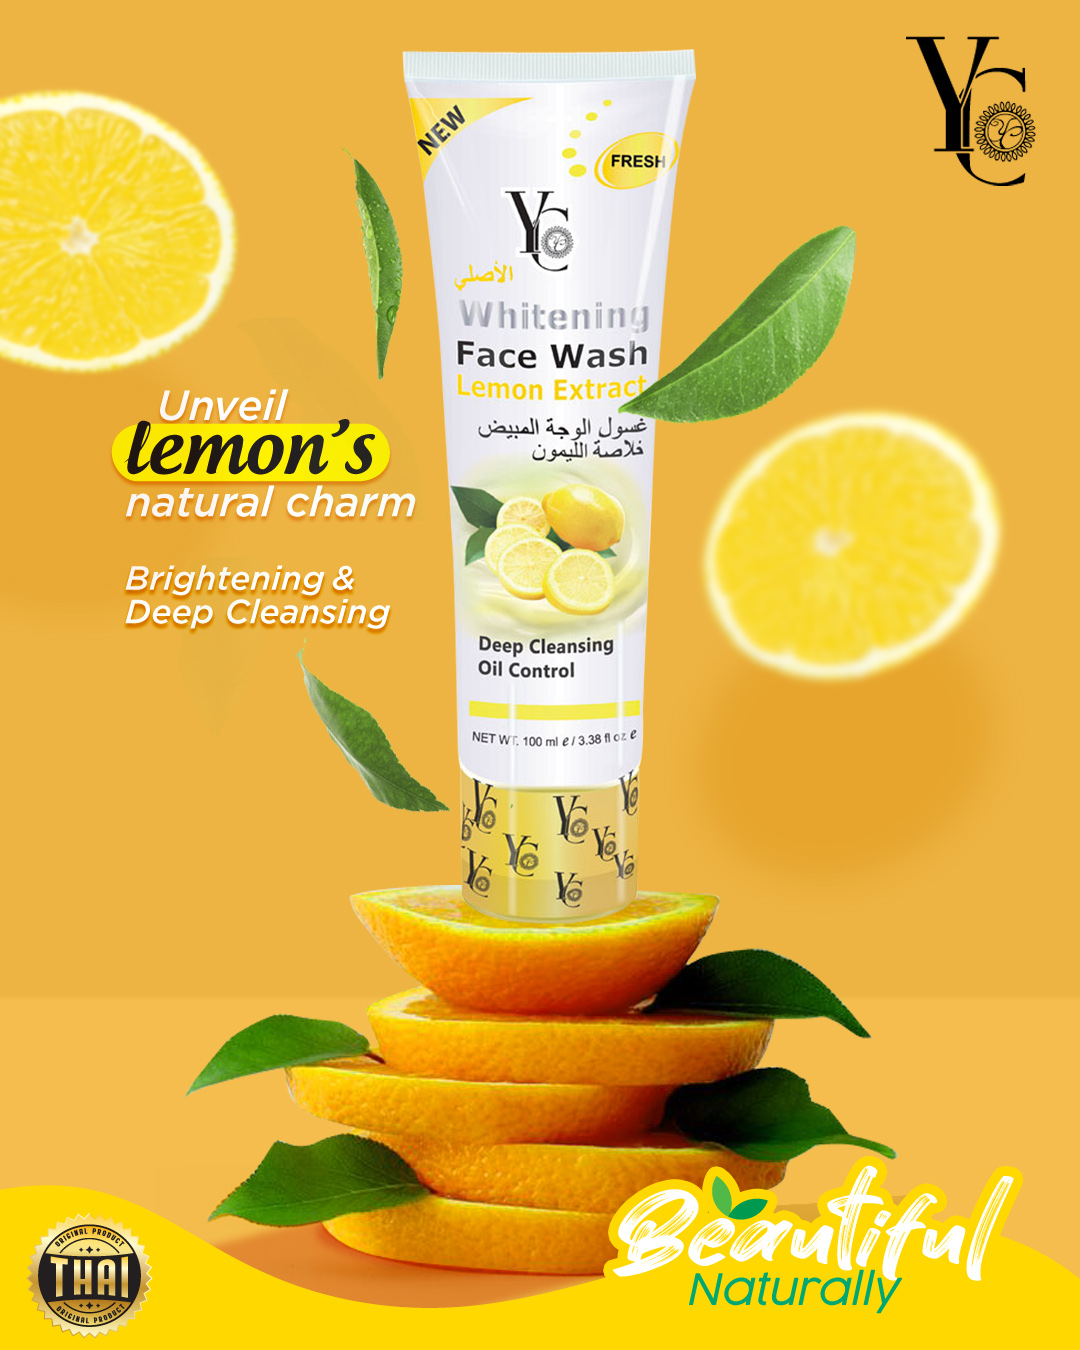 YC Lemon Extract Whitening Face Wash - Brighten Your Skin Naturally